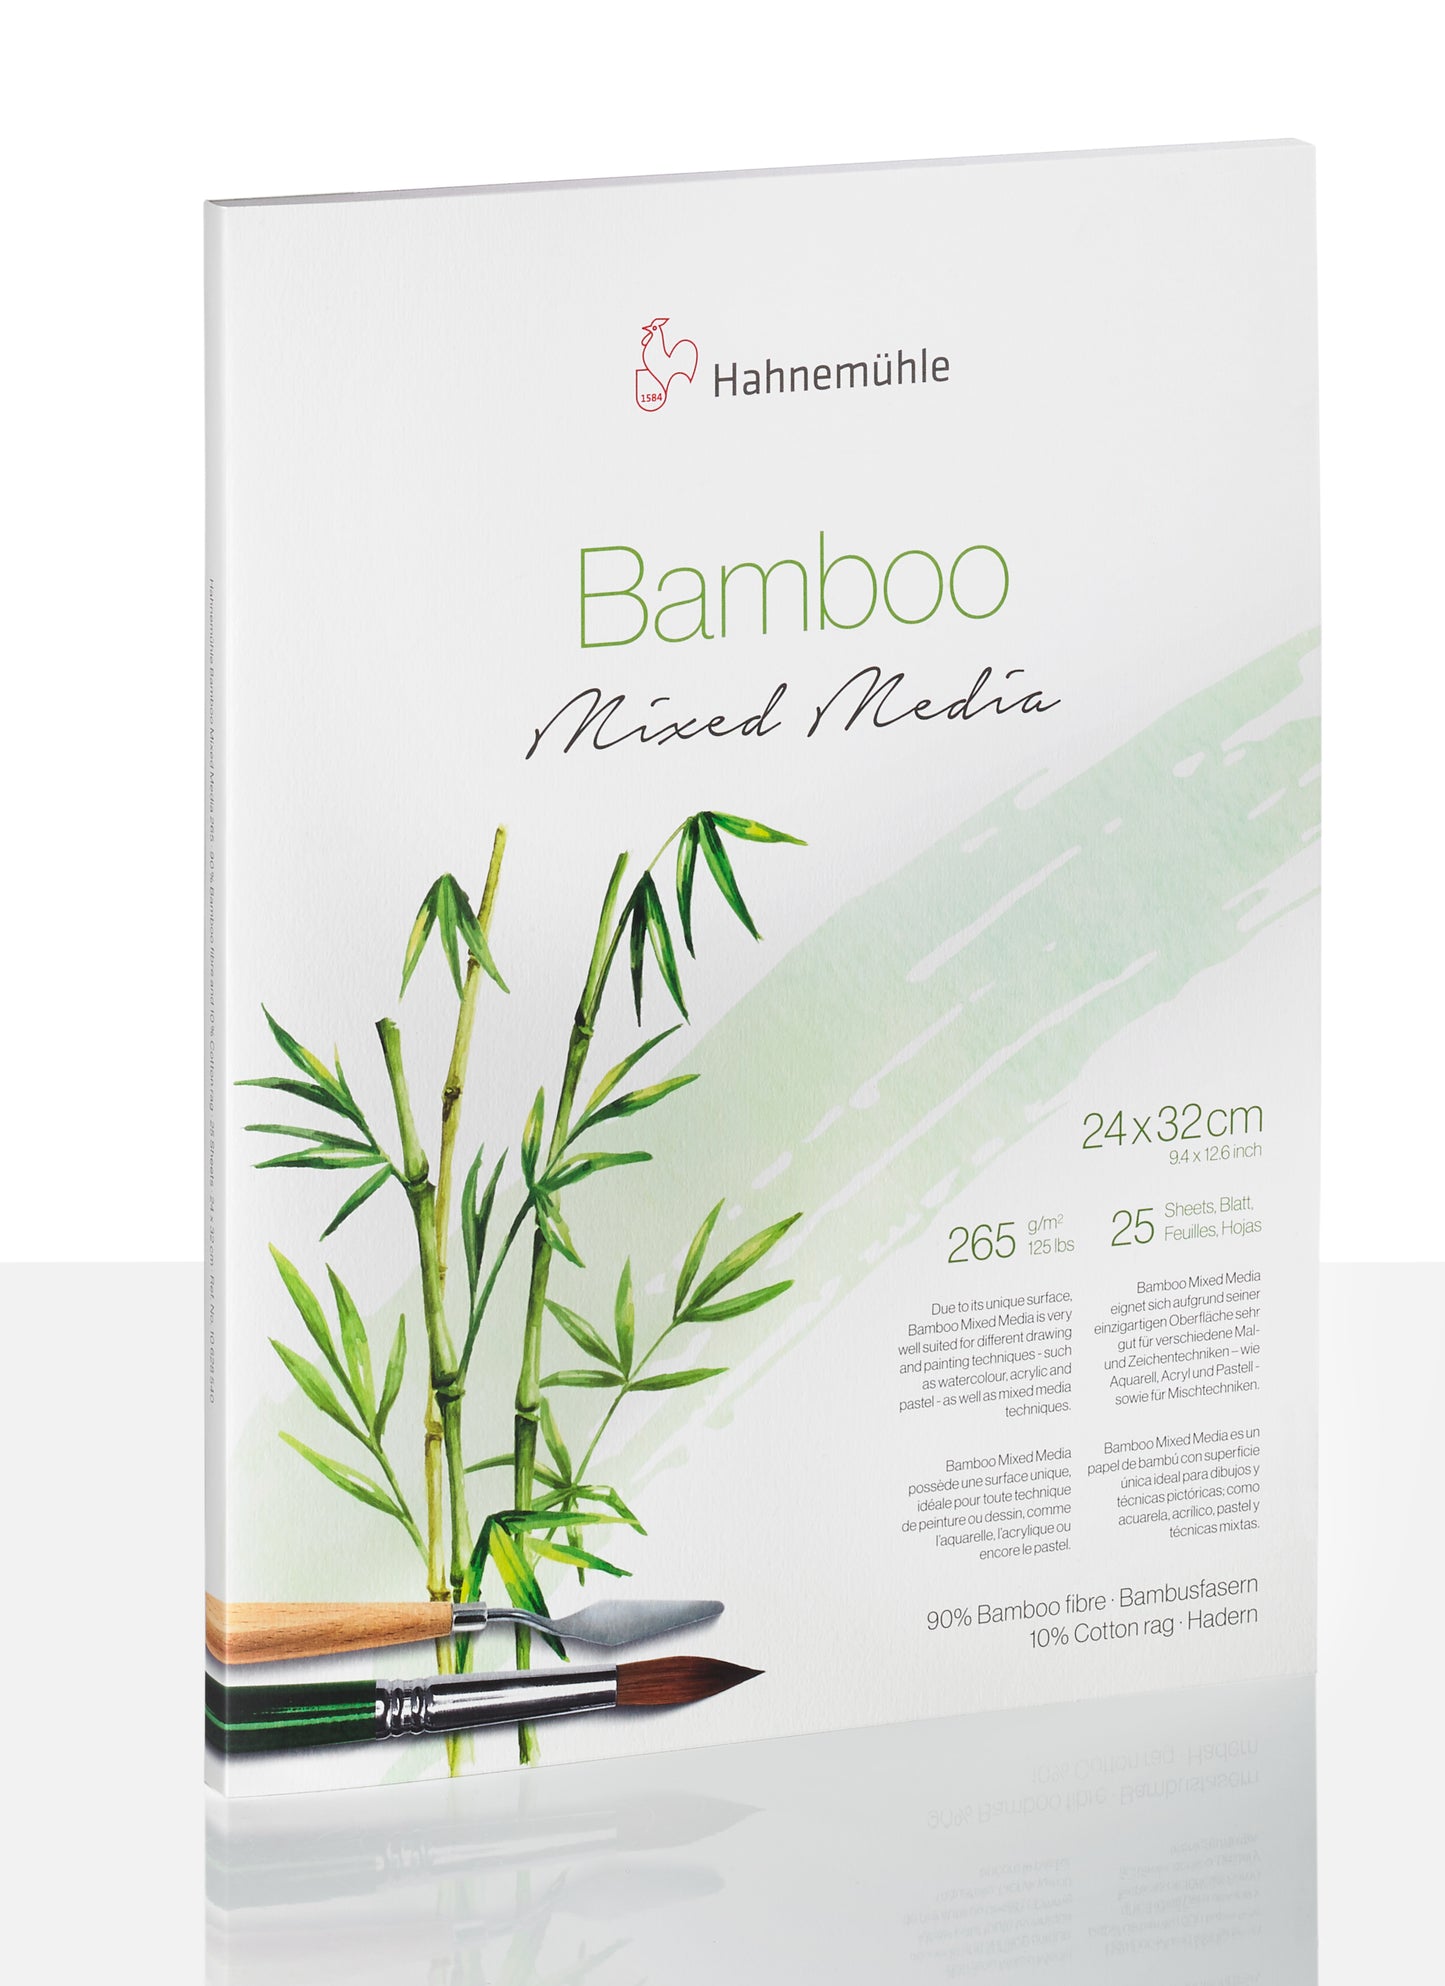 Bloques de técnica mixta de bambú de Hahnemuhle